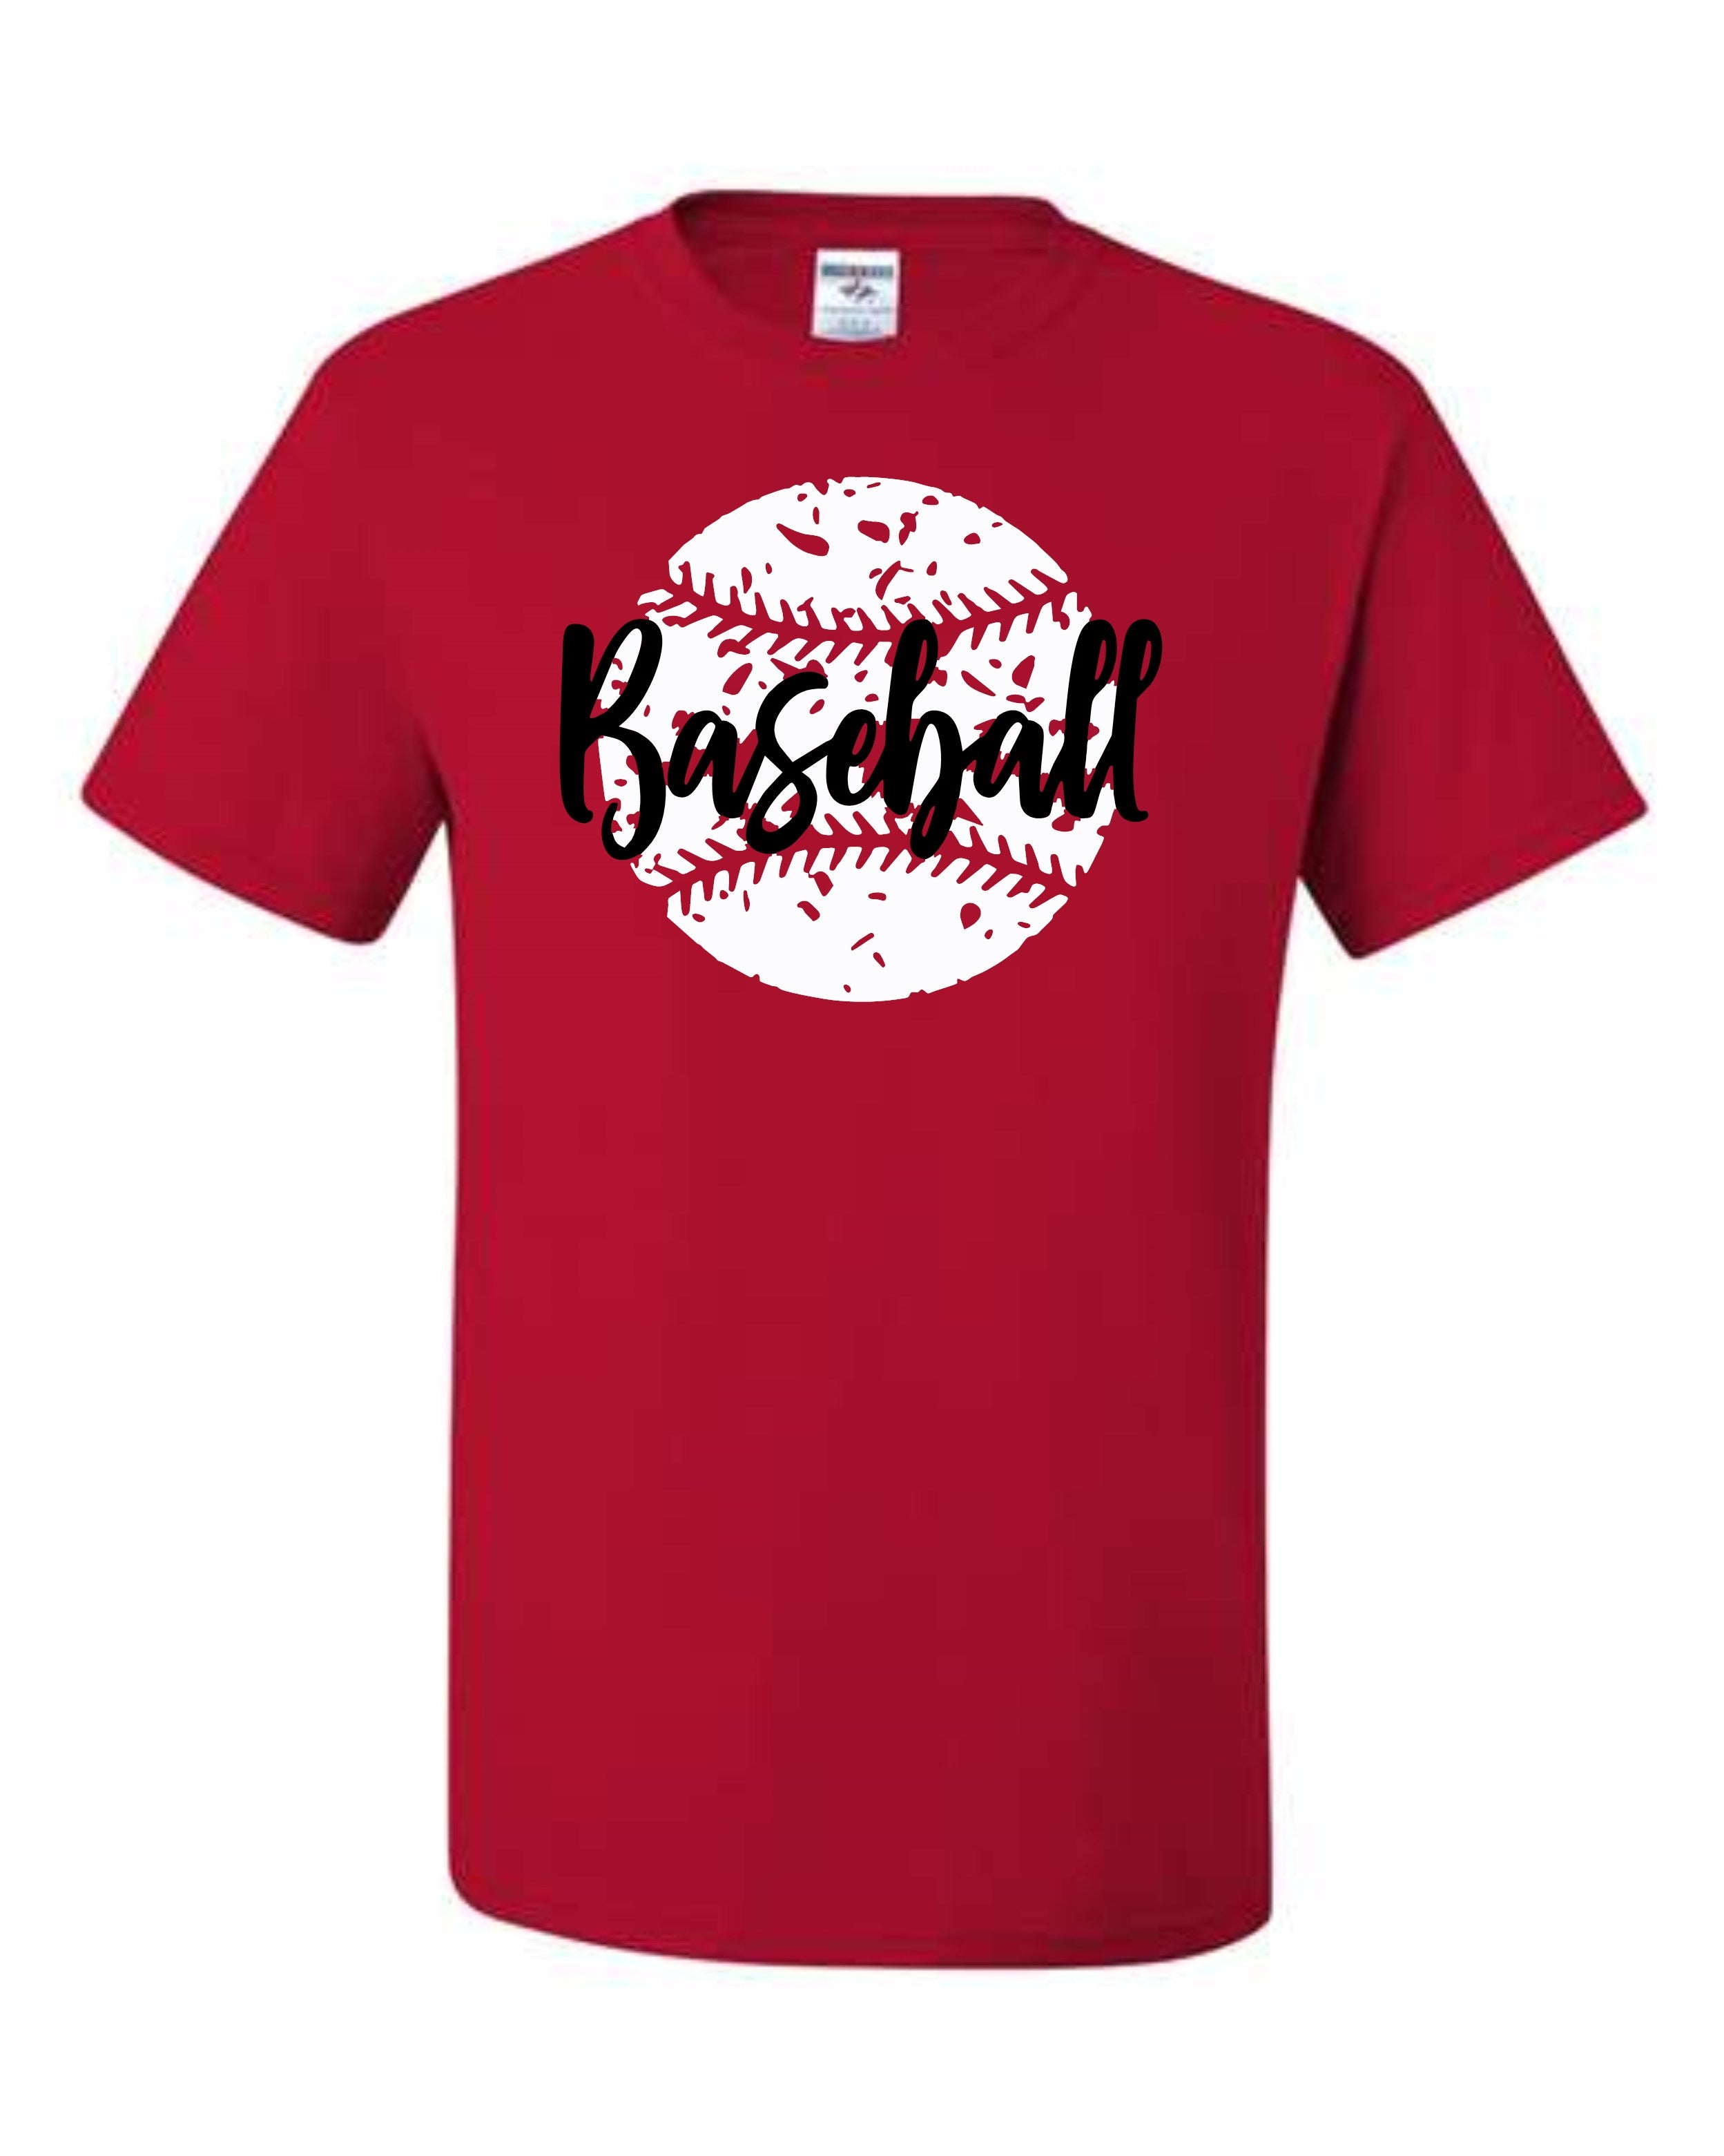 Baseball short sleeve t-shirt